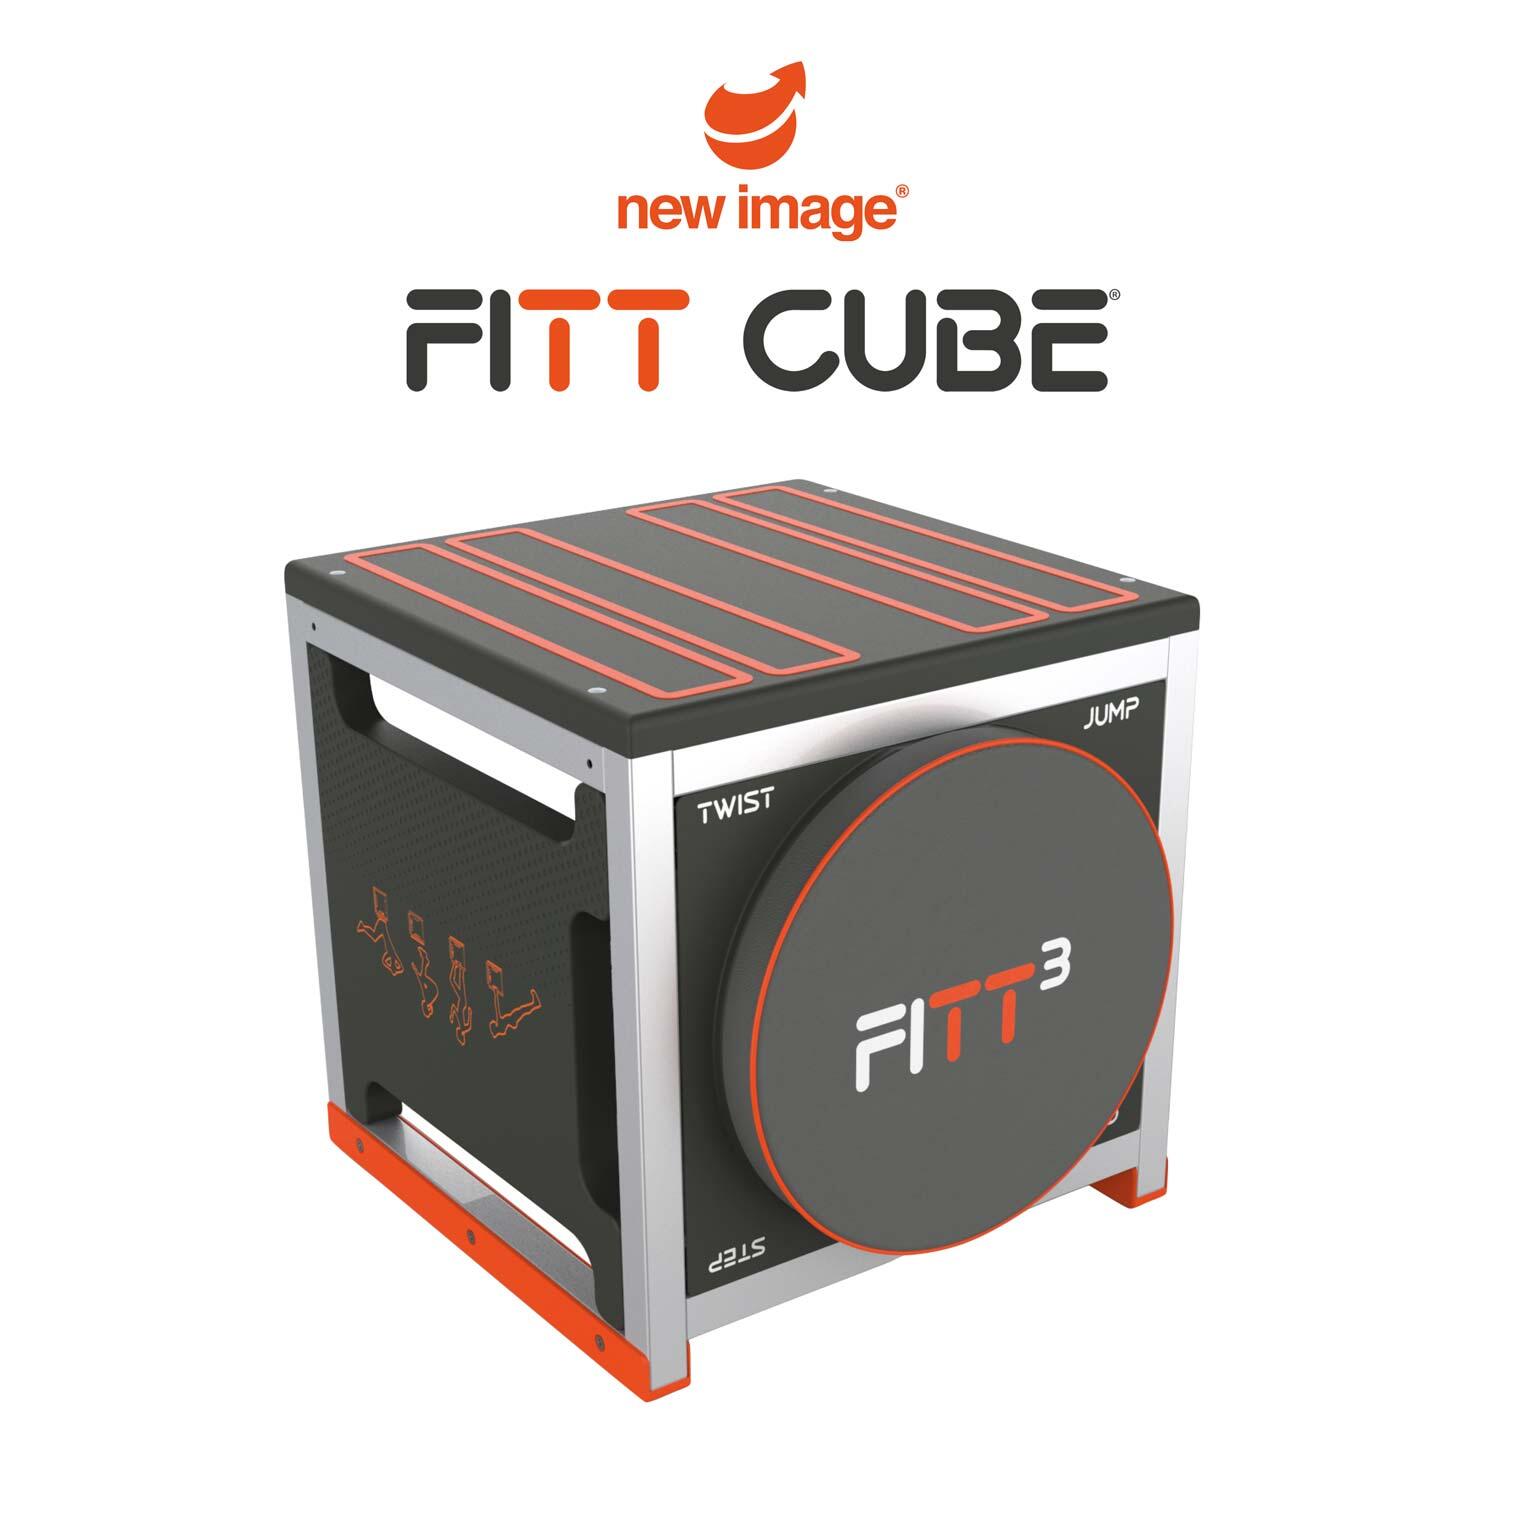 NEW IMAGE Fitt Cube